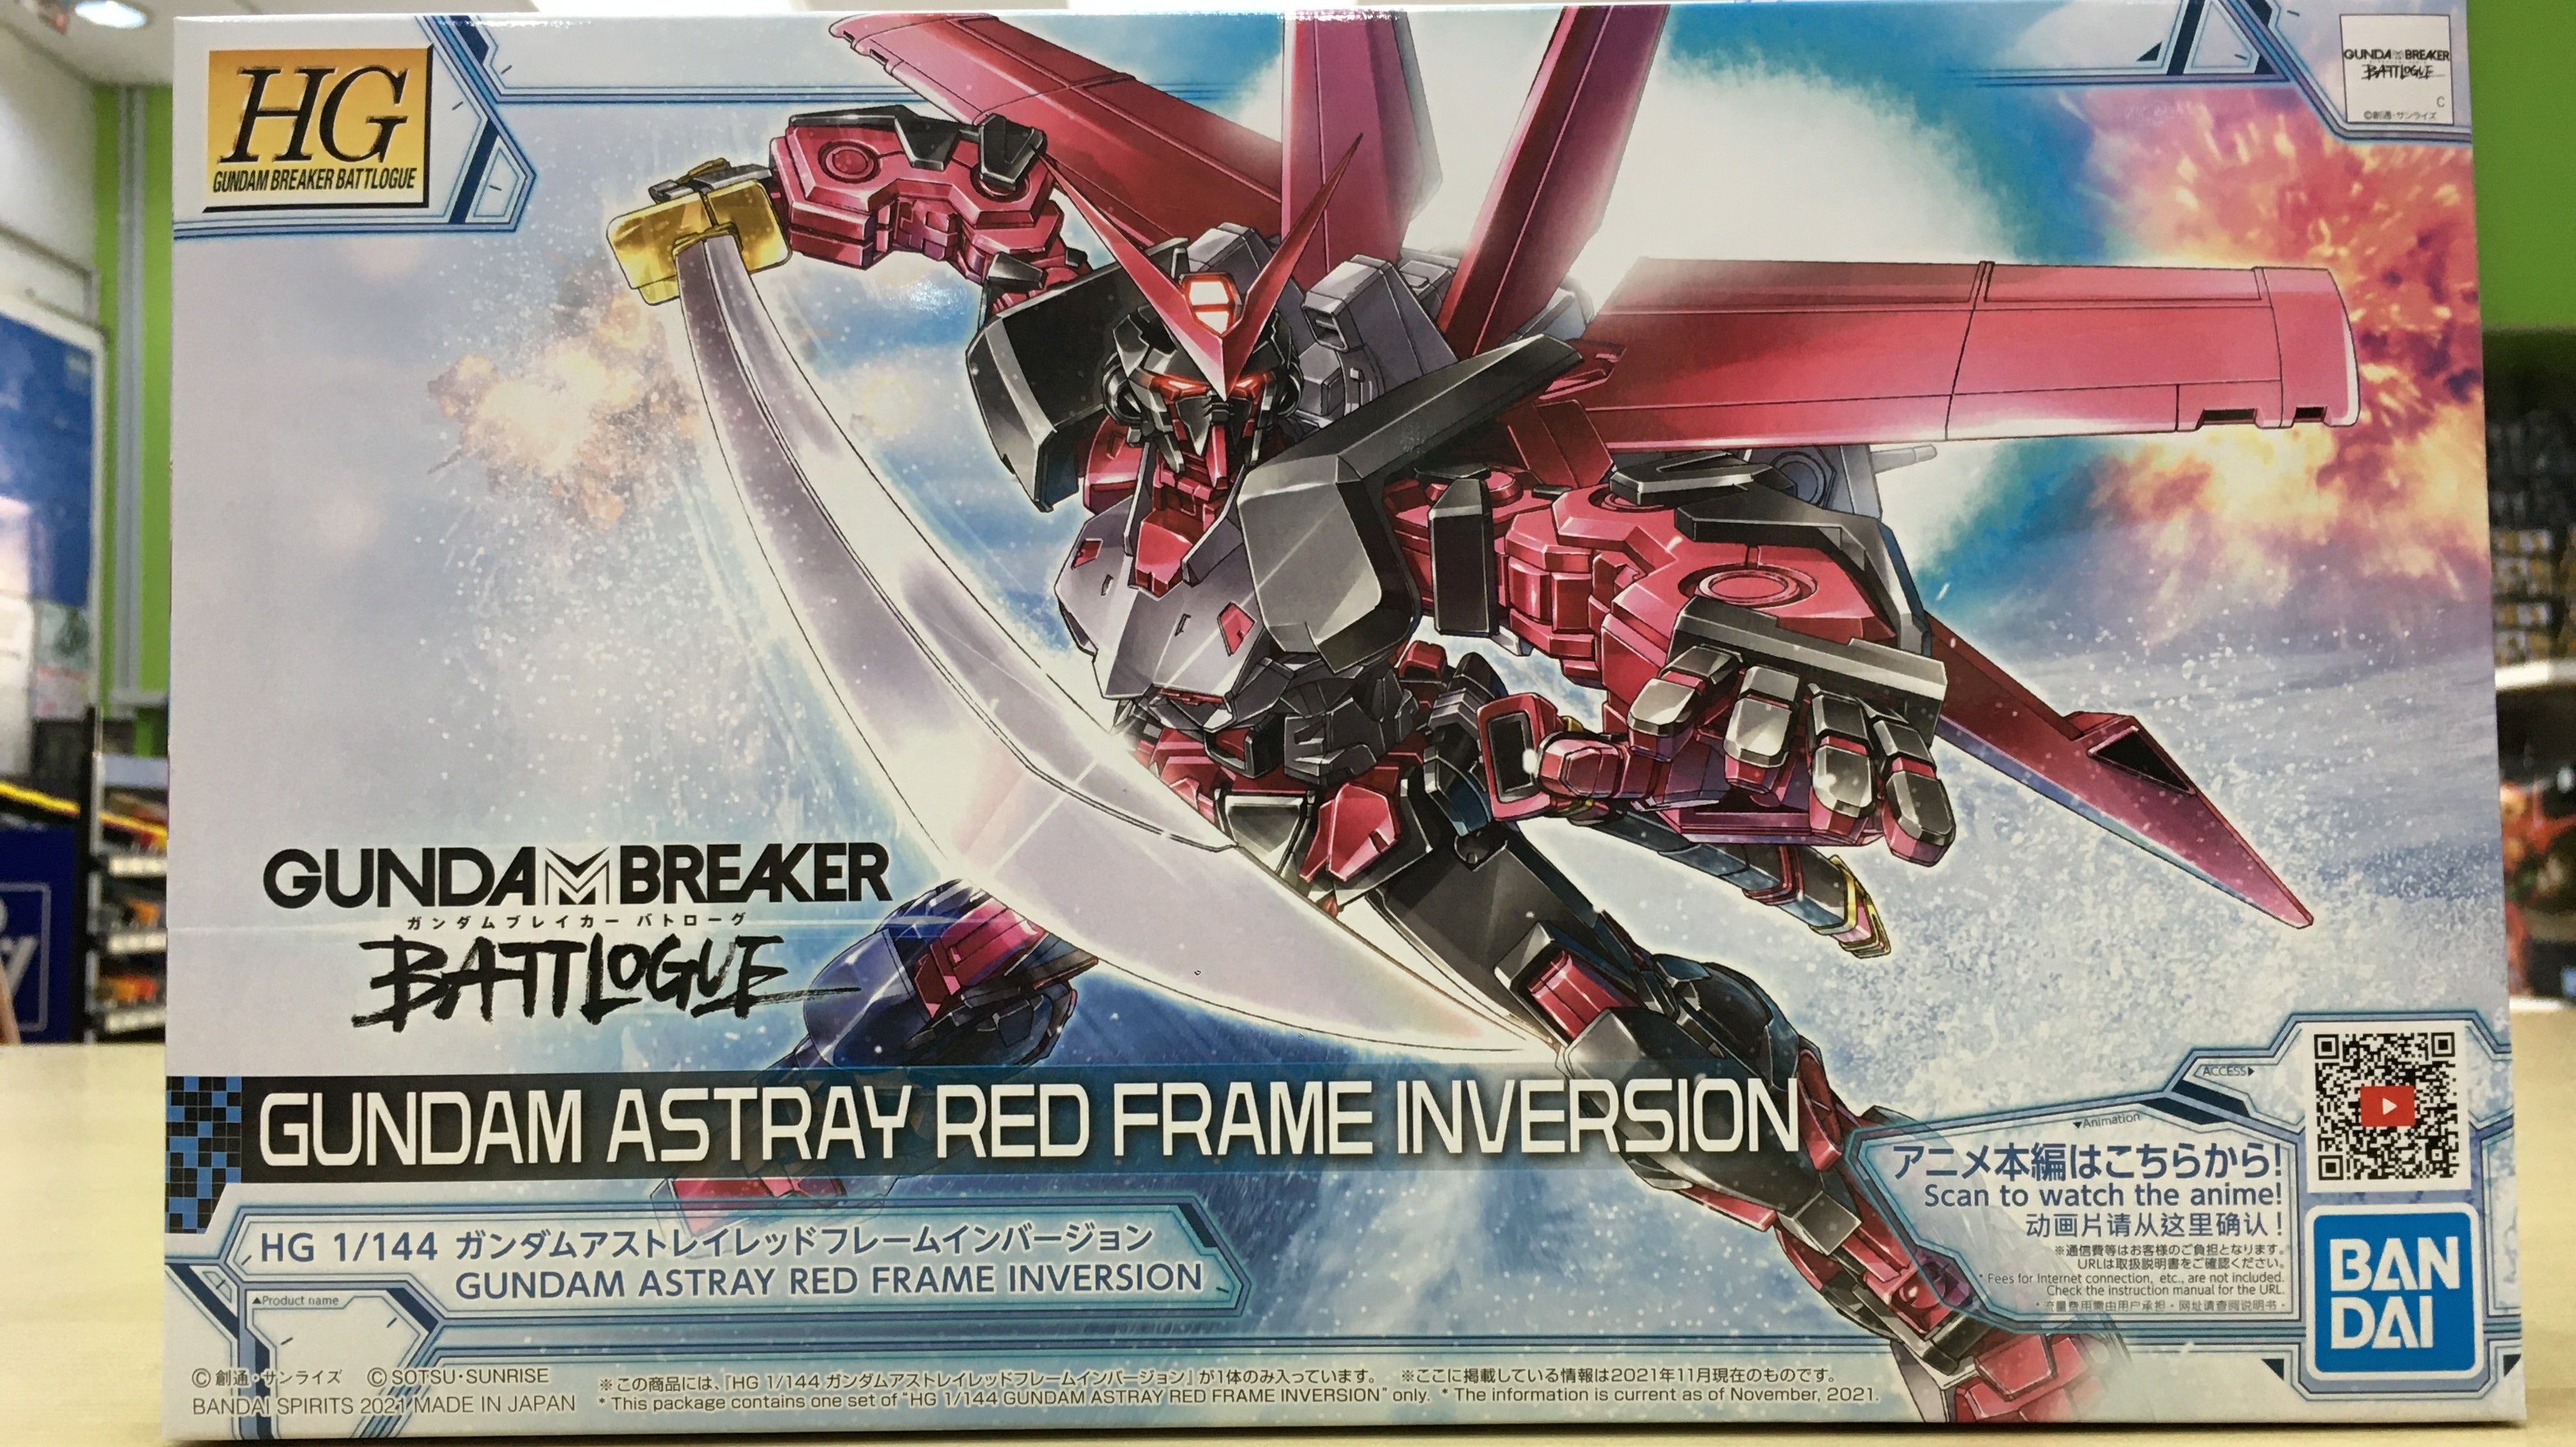 HG Gundam Astray Red Frame Inversion